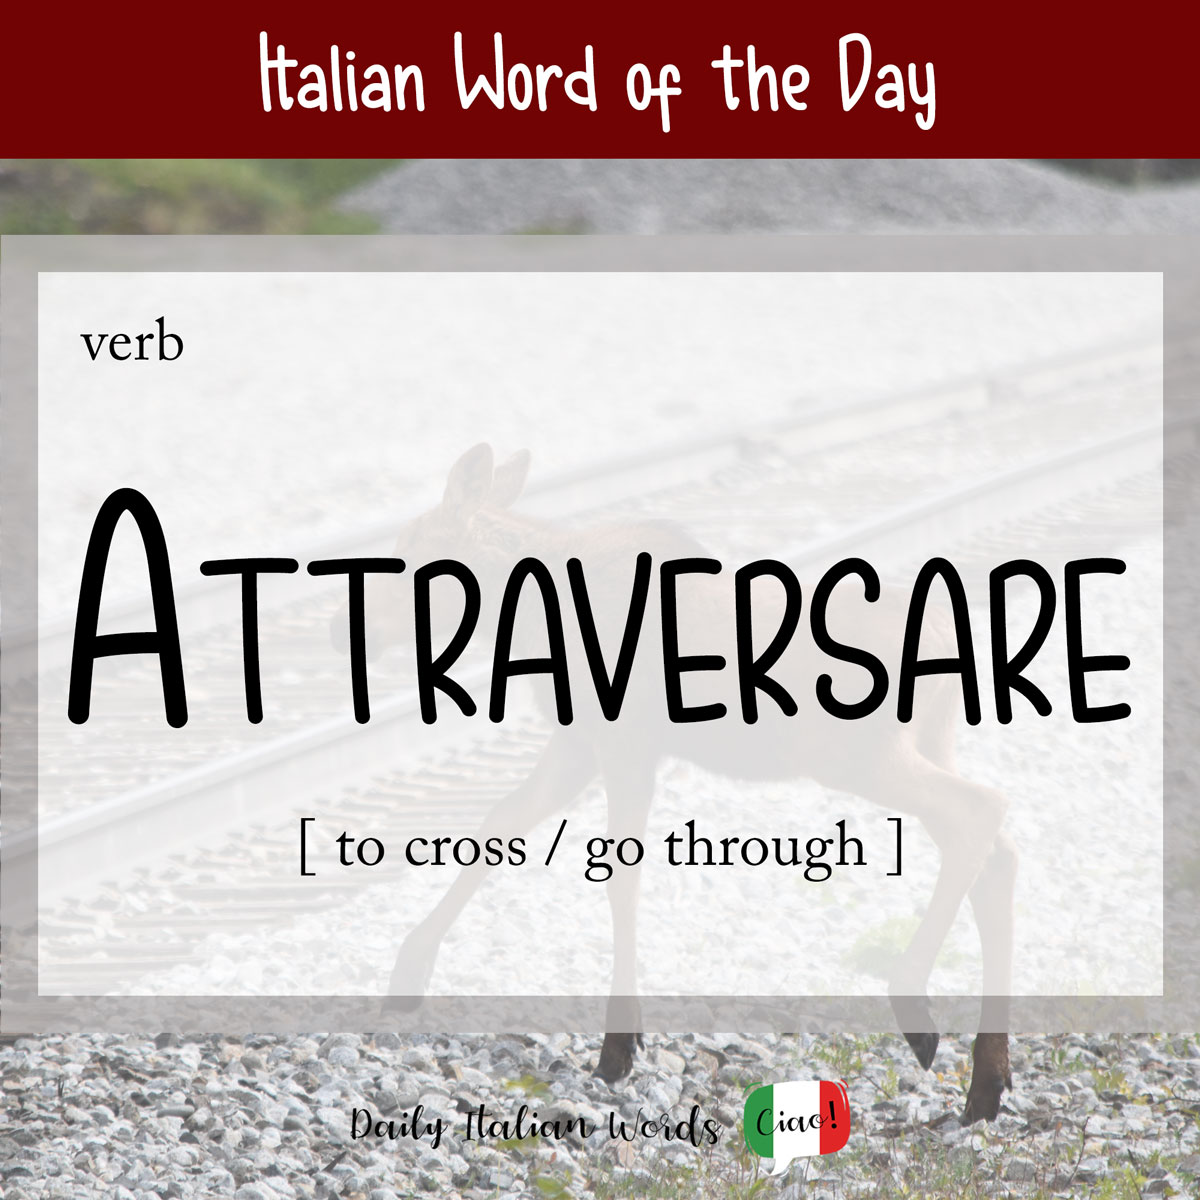 Italian Phrase of the Day: Attraversare (to cross / undergo)